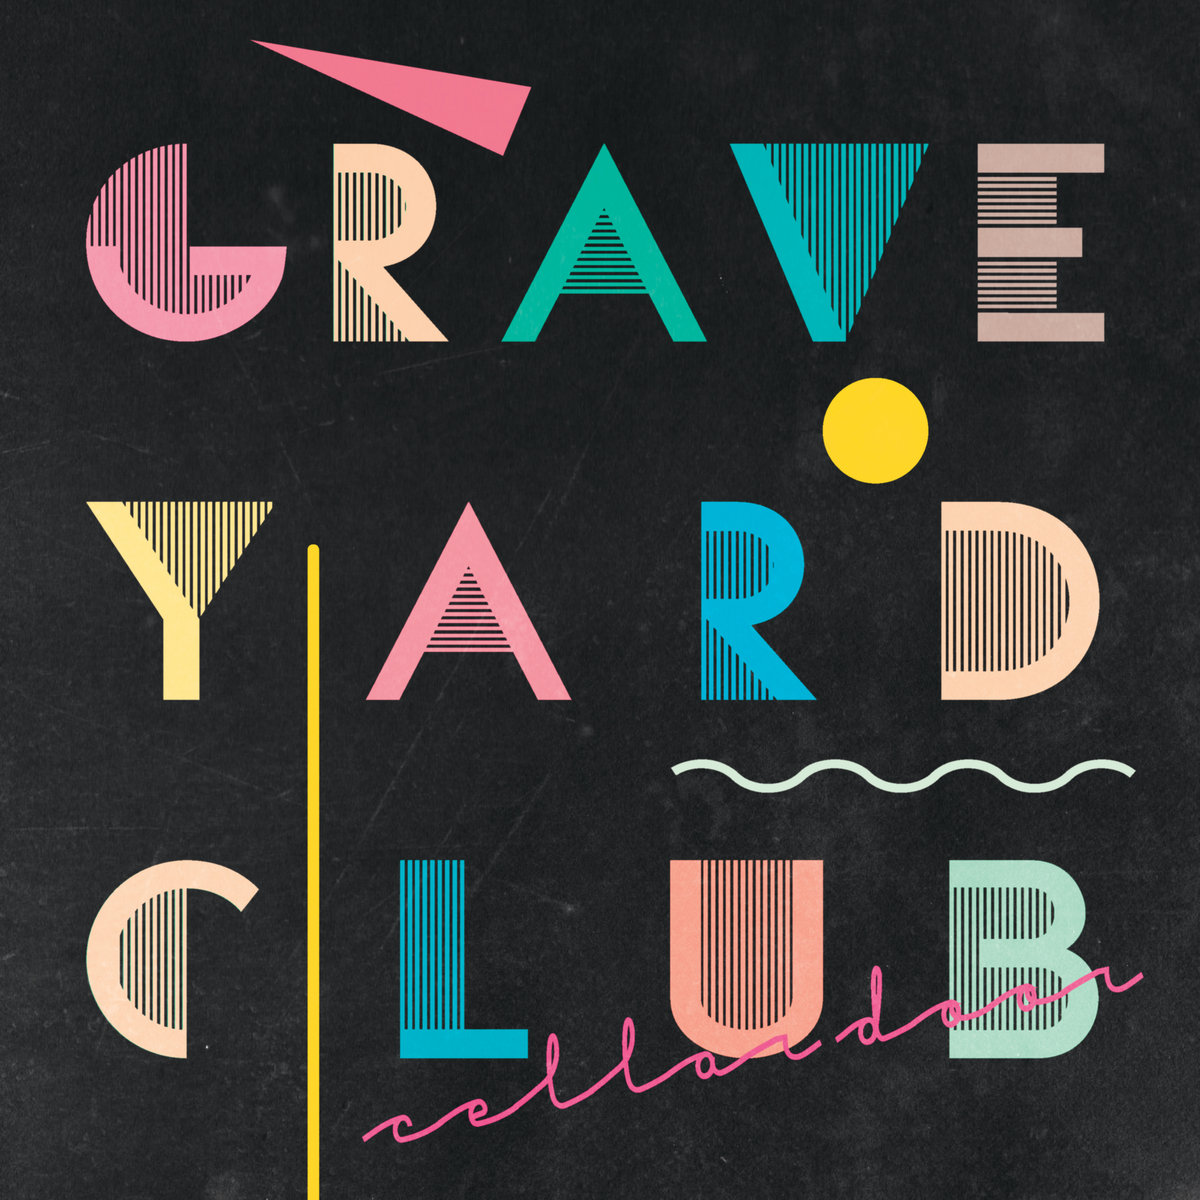 Graveyard Club — Werewolf Teeth cover artwork